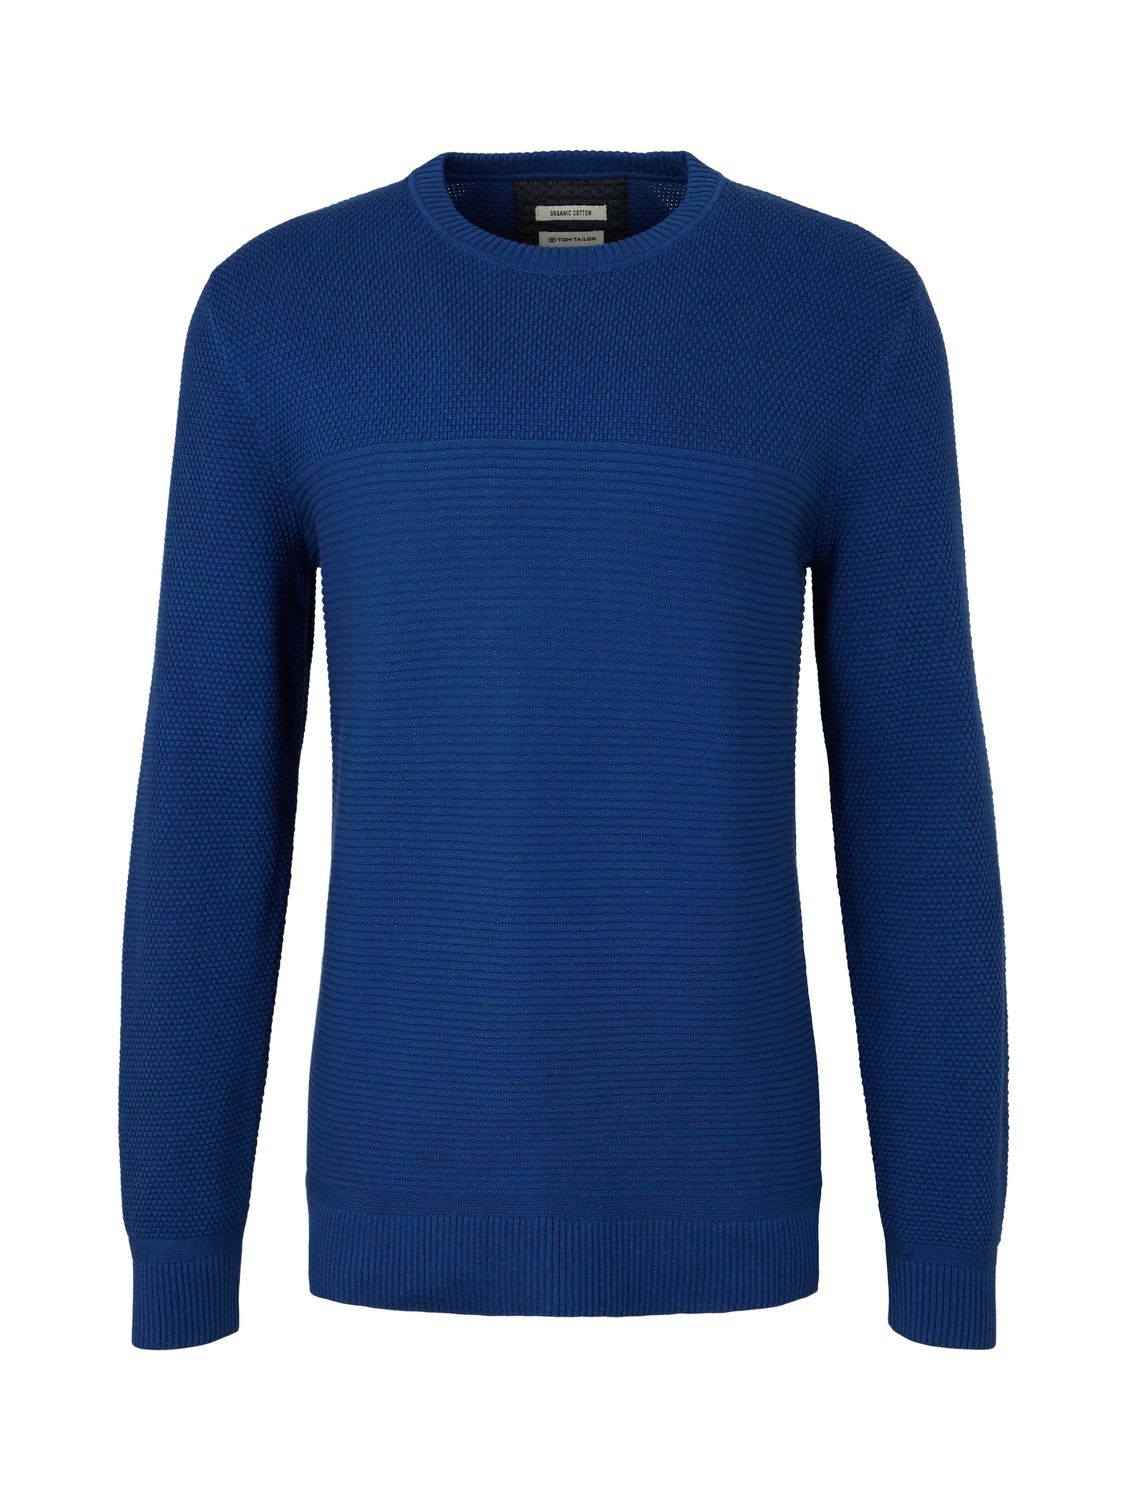 Пуловер Tom Tailor BASIC STRUCTURED, синий пуловер tom tailor denim structured basic серый